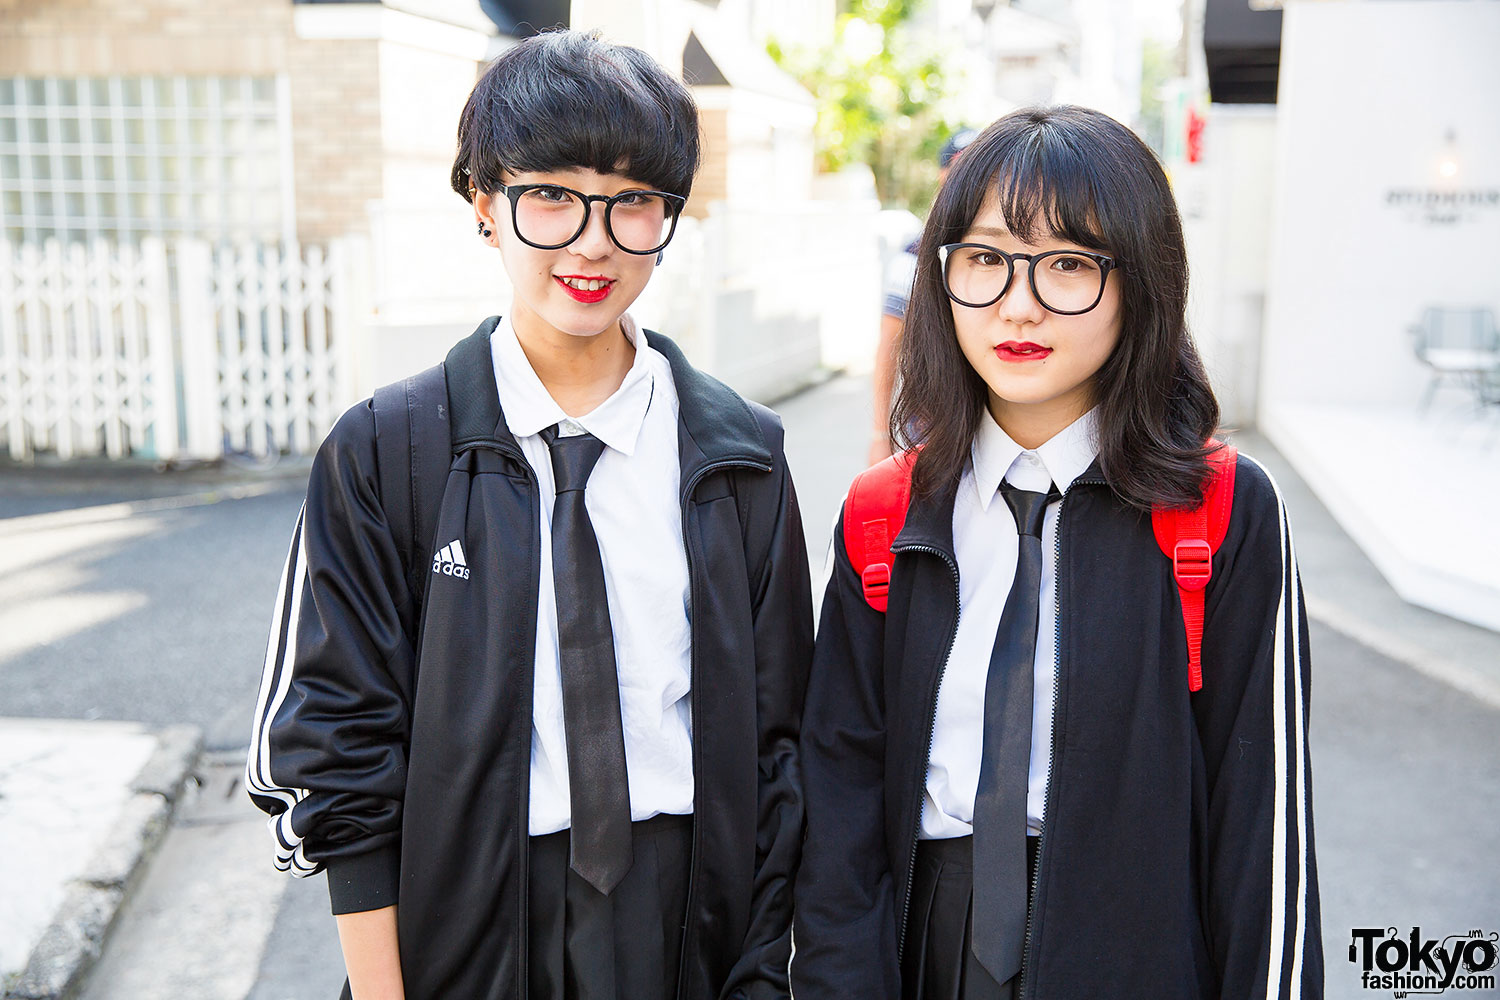 Harajuku School Girls w/ Glasses, Uniforms, Adidas Jacket & Nike Sneakers